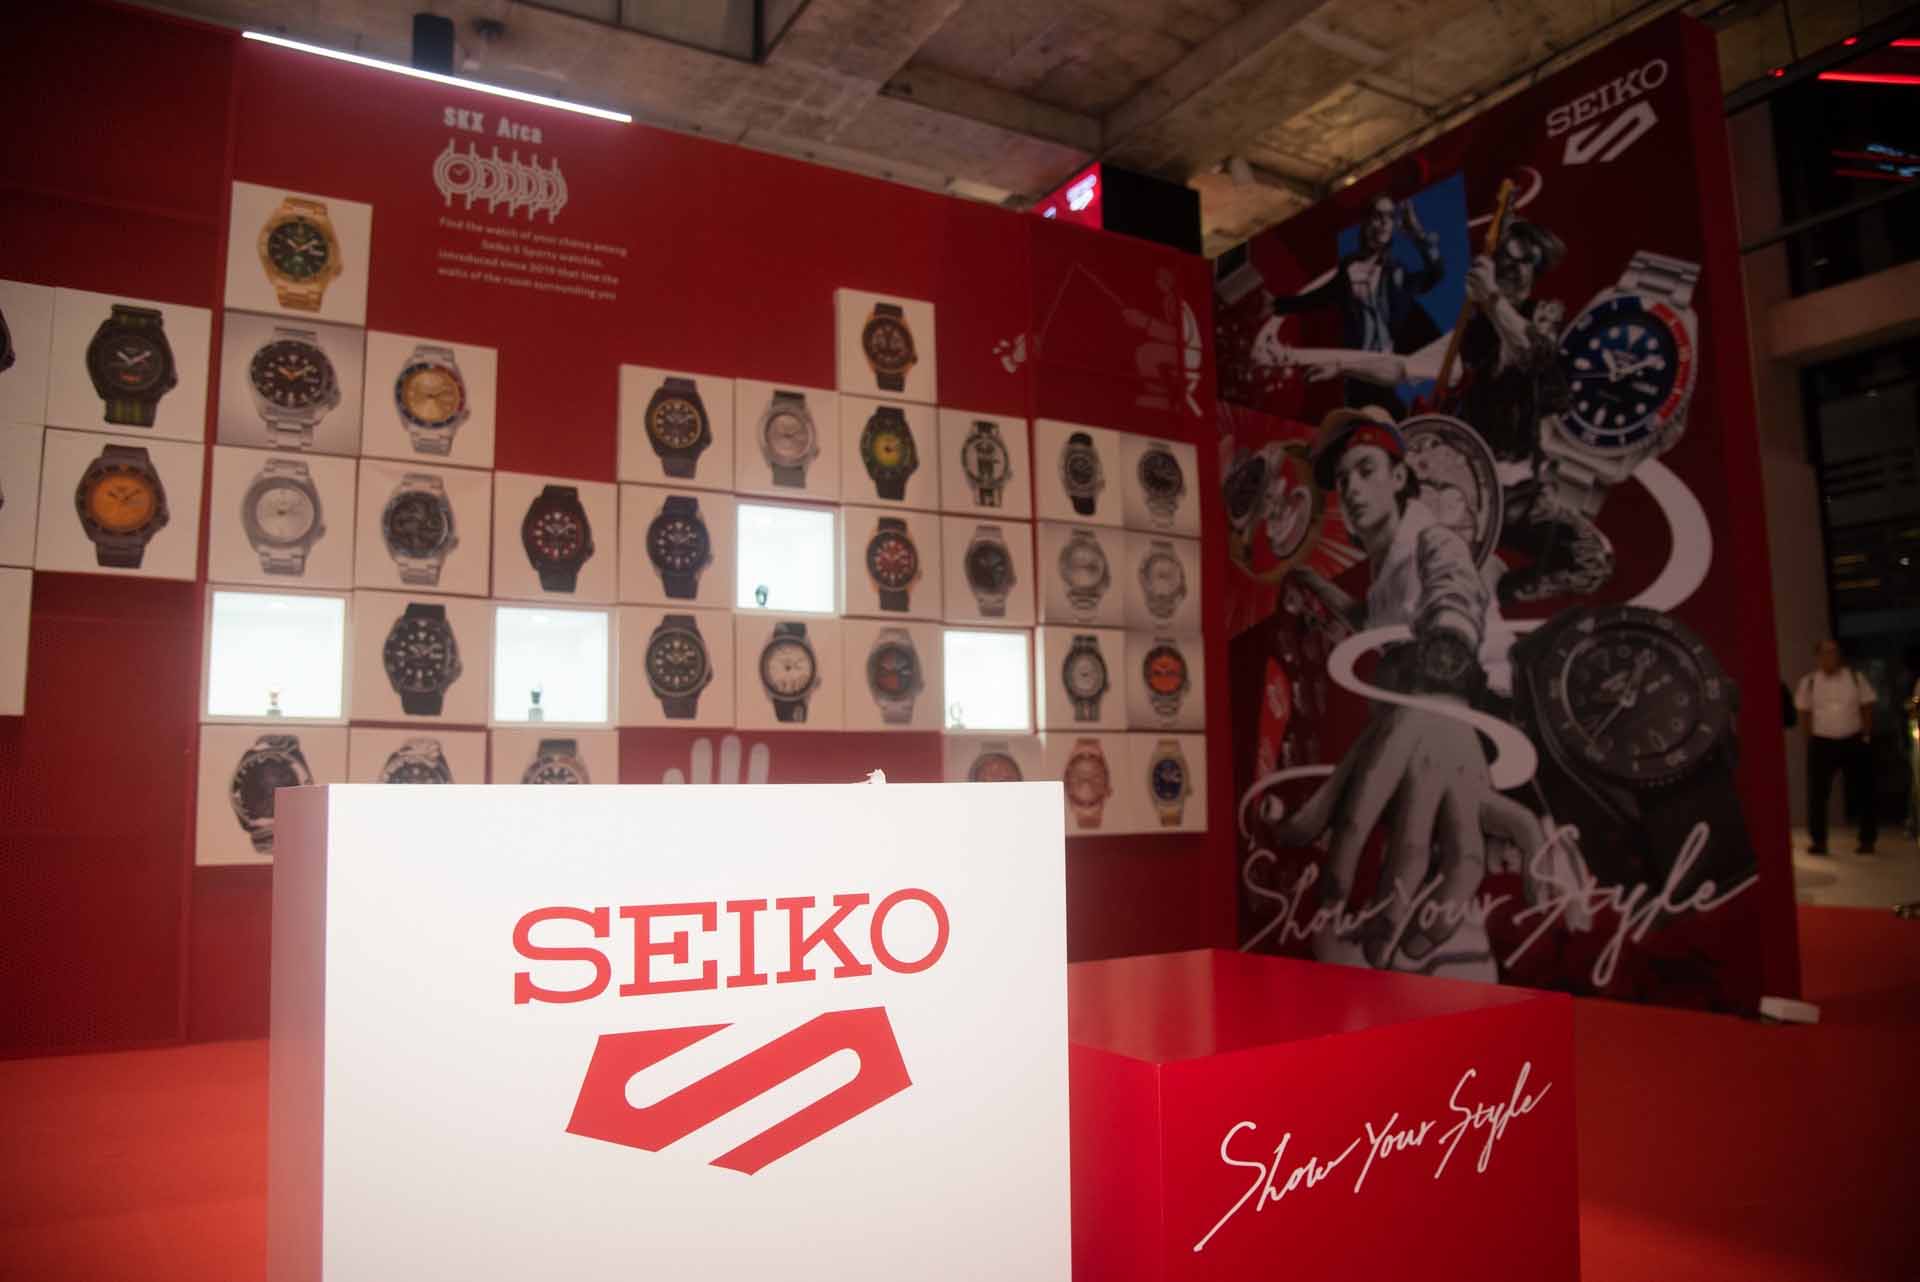 Seiko 5 Sports ฉลอง 55 ปี